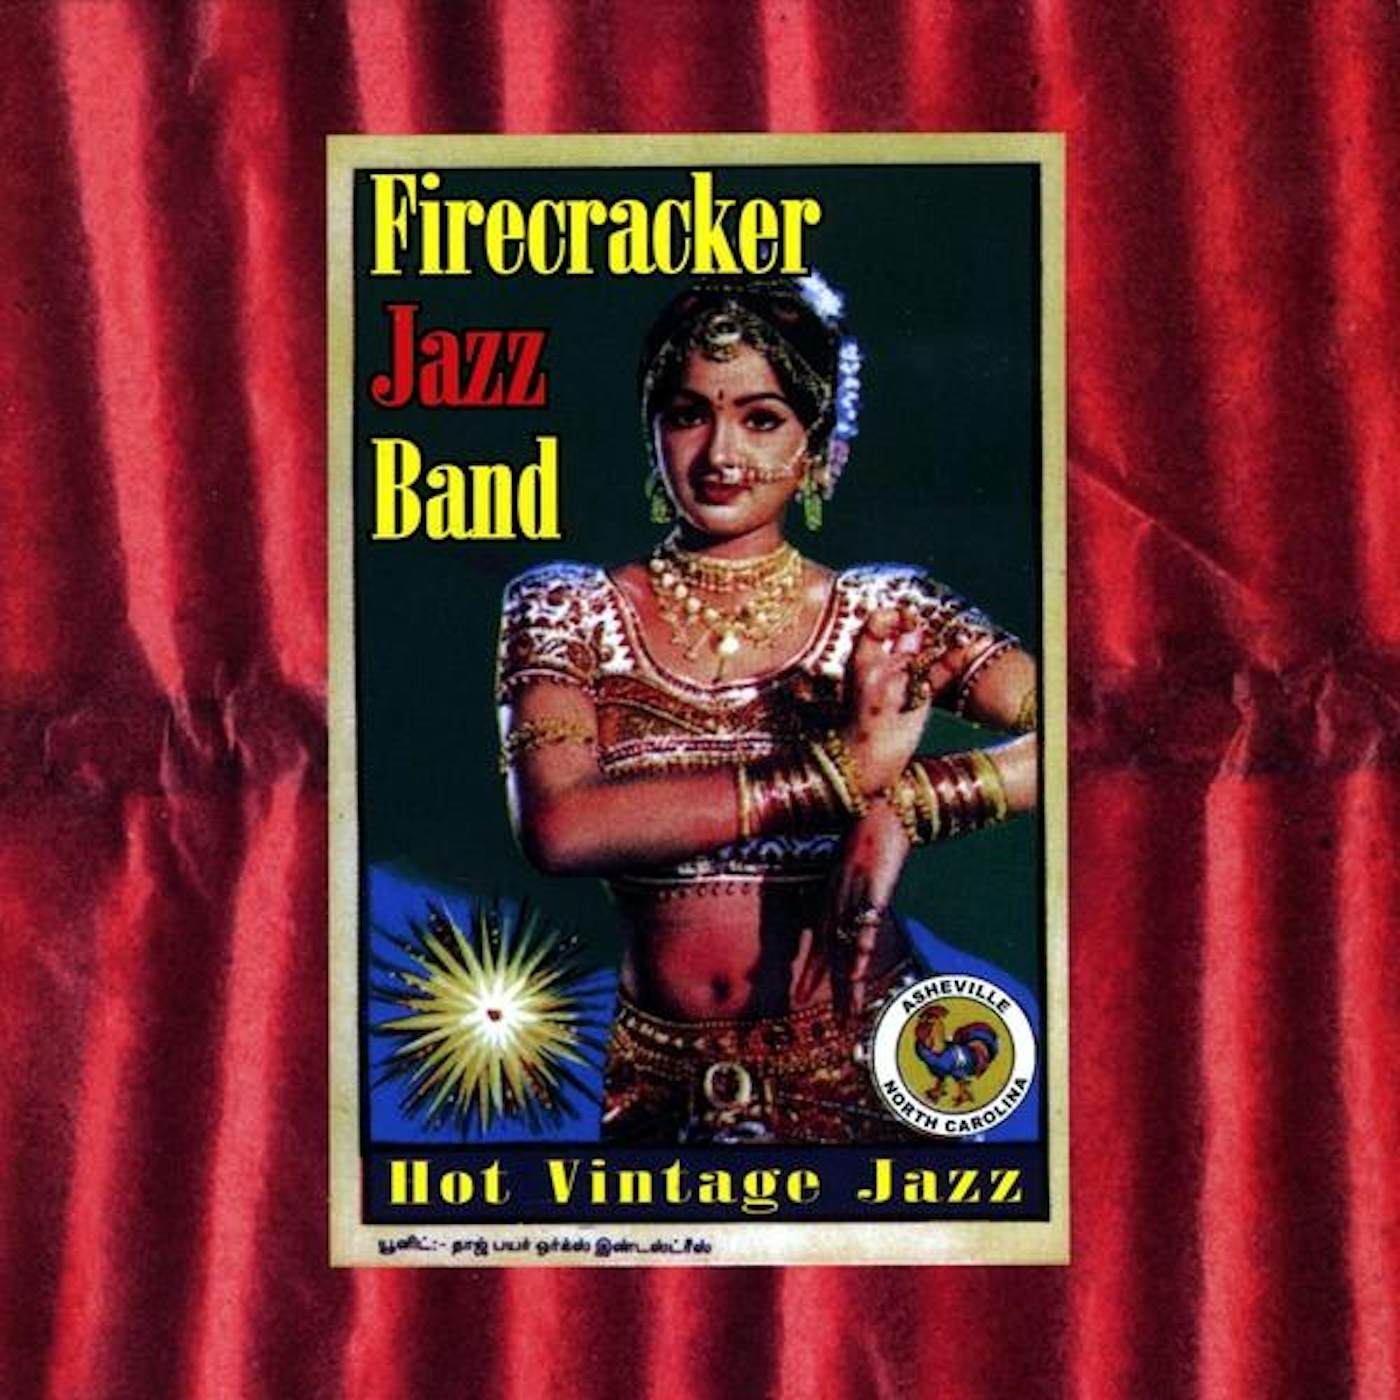 Firecracker Jazz Band HOT VINTAGE JAZZ CD